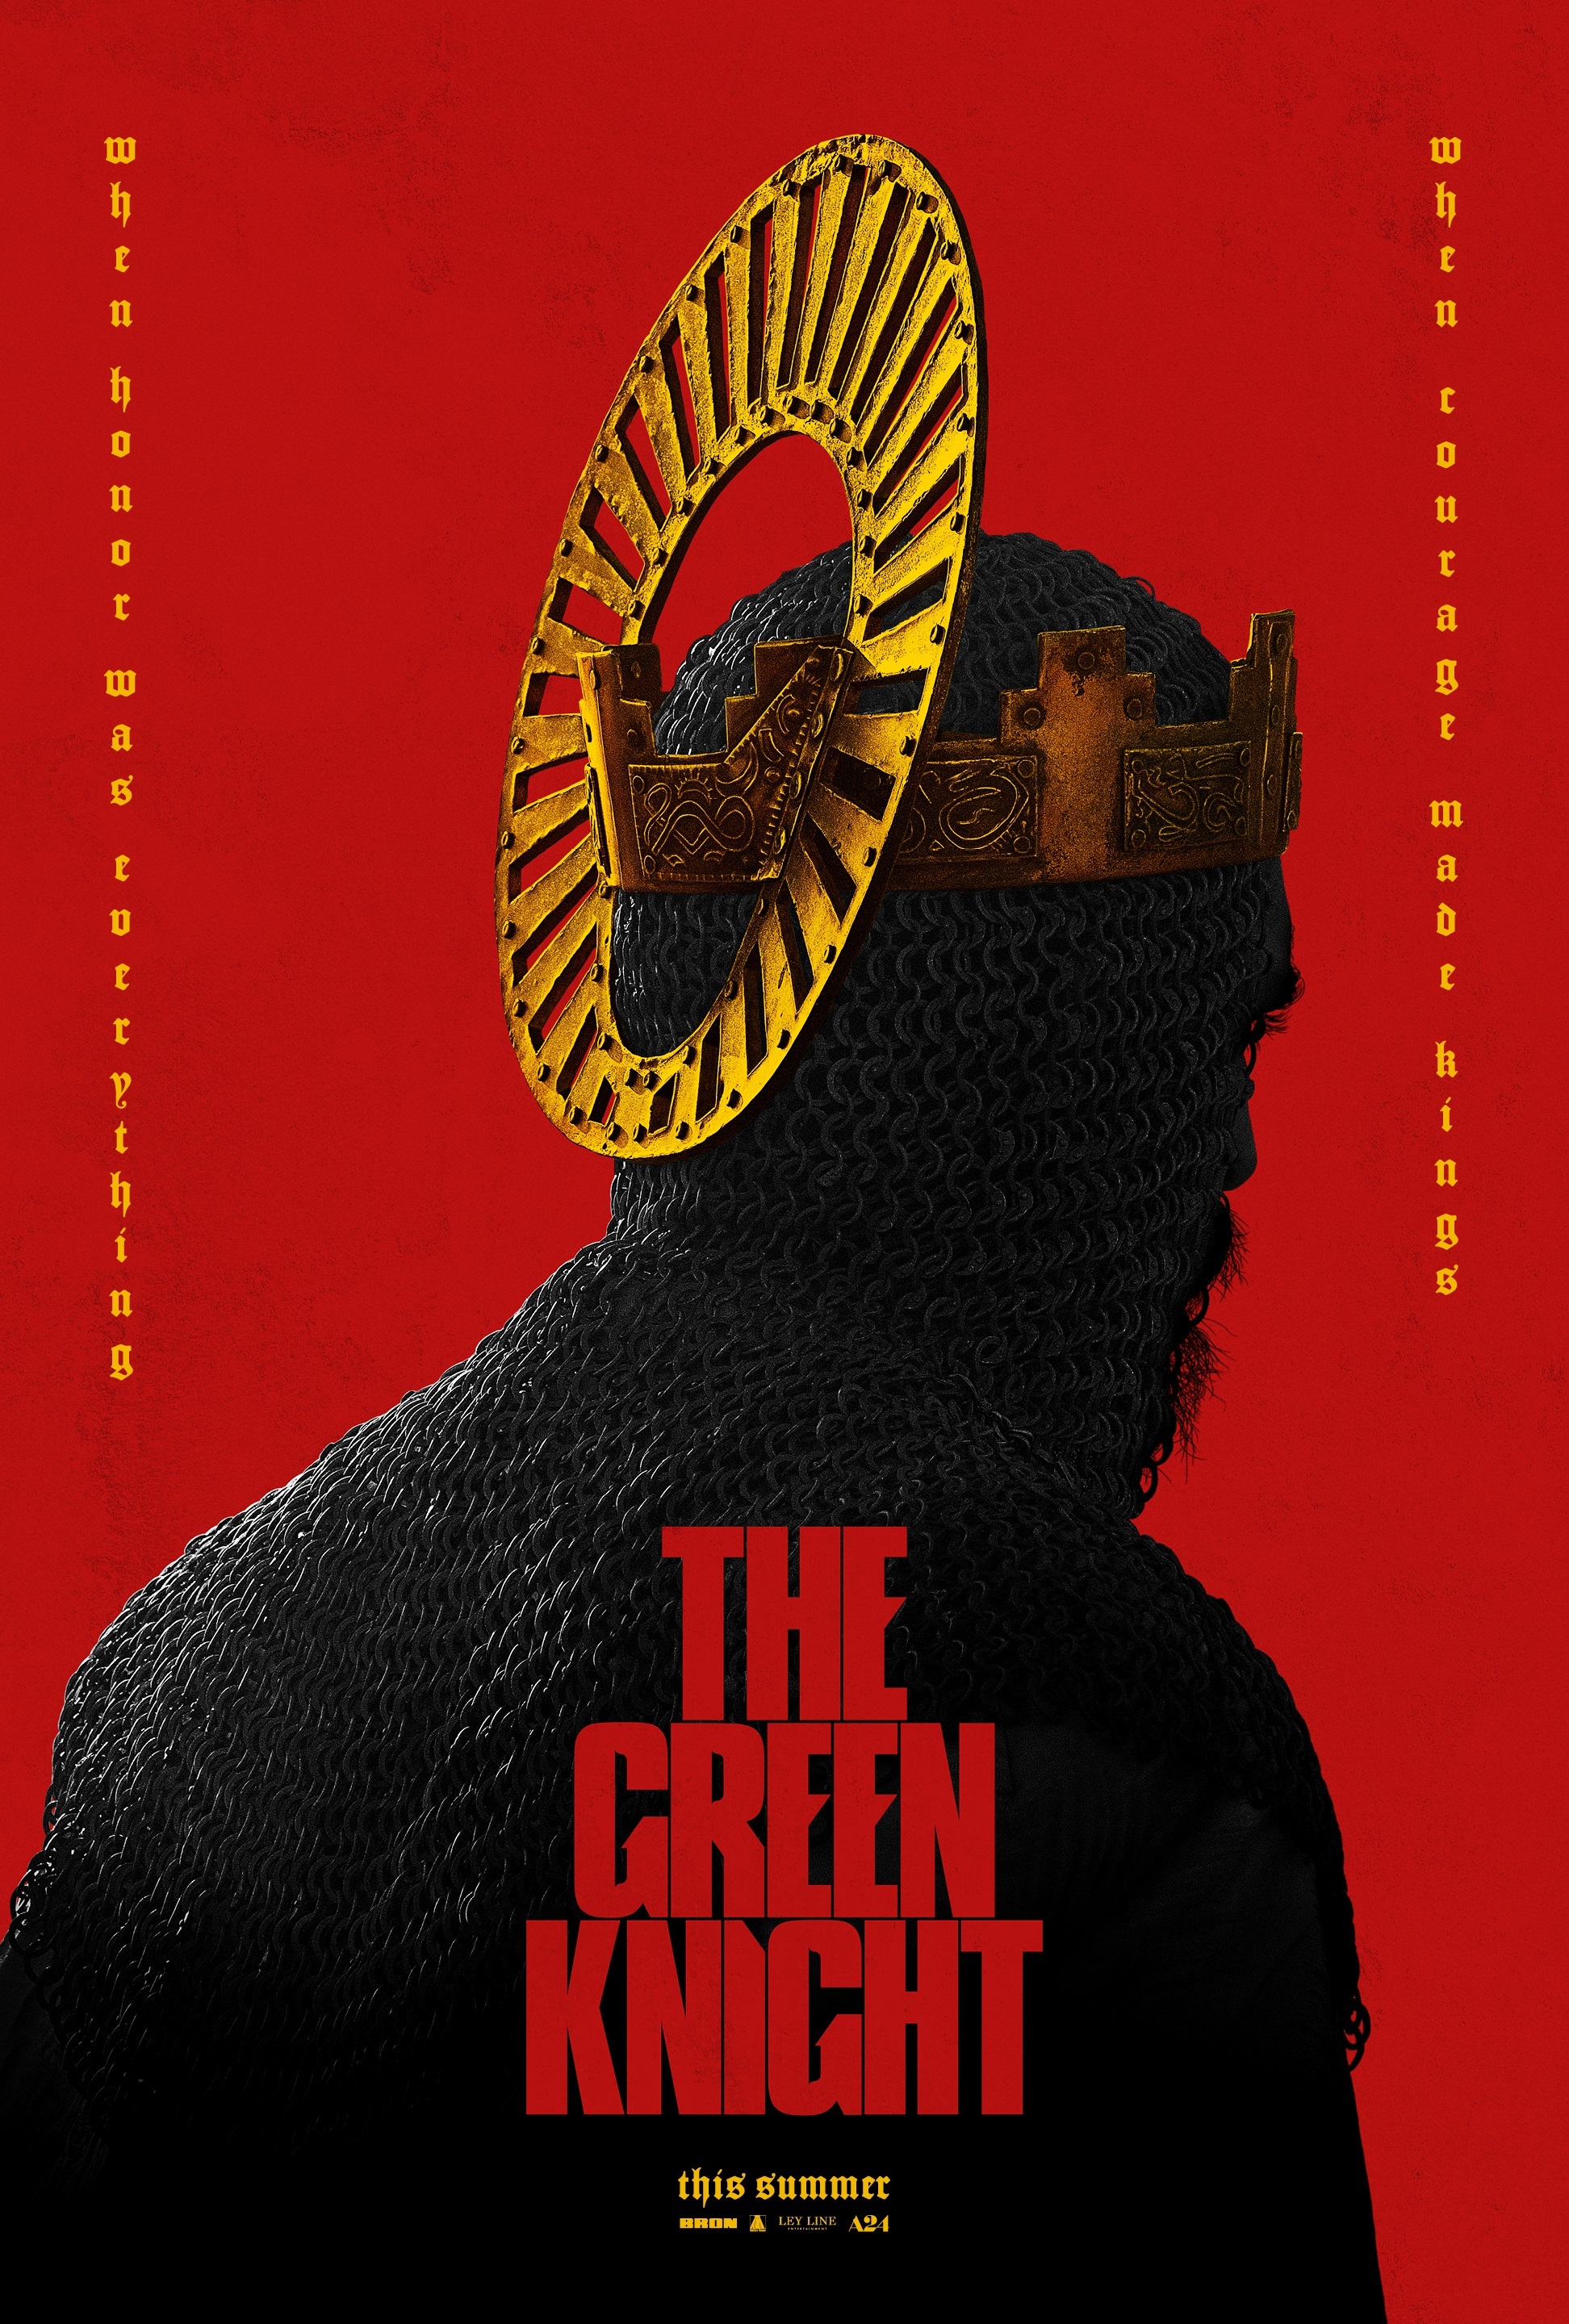 Stiahni si Filmy CZ/SK dabing Zelený rytíř / The Green Knight (2021)(CZ)[WEBRip][720p] = CSFD 63%